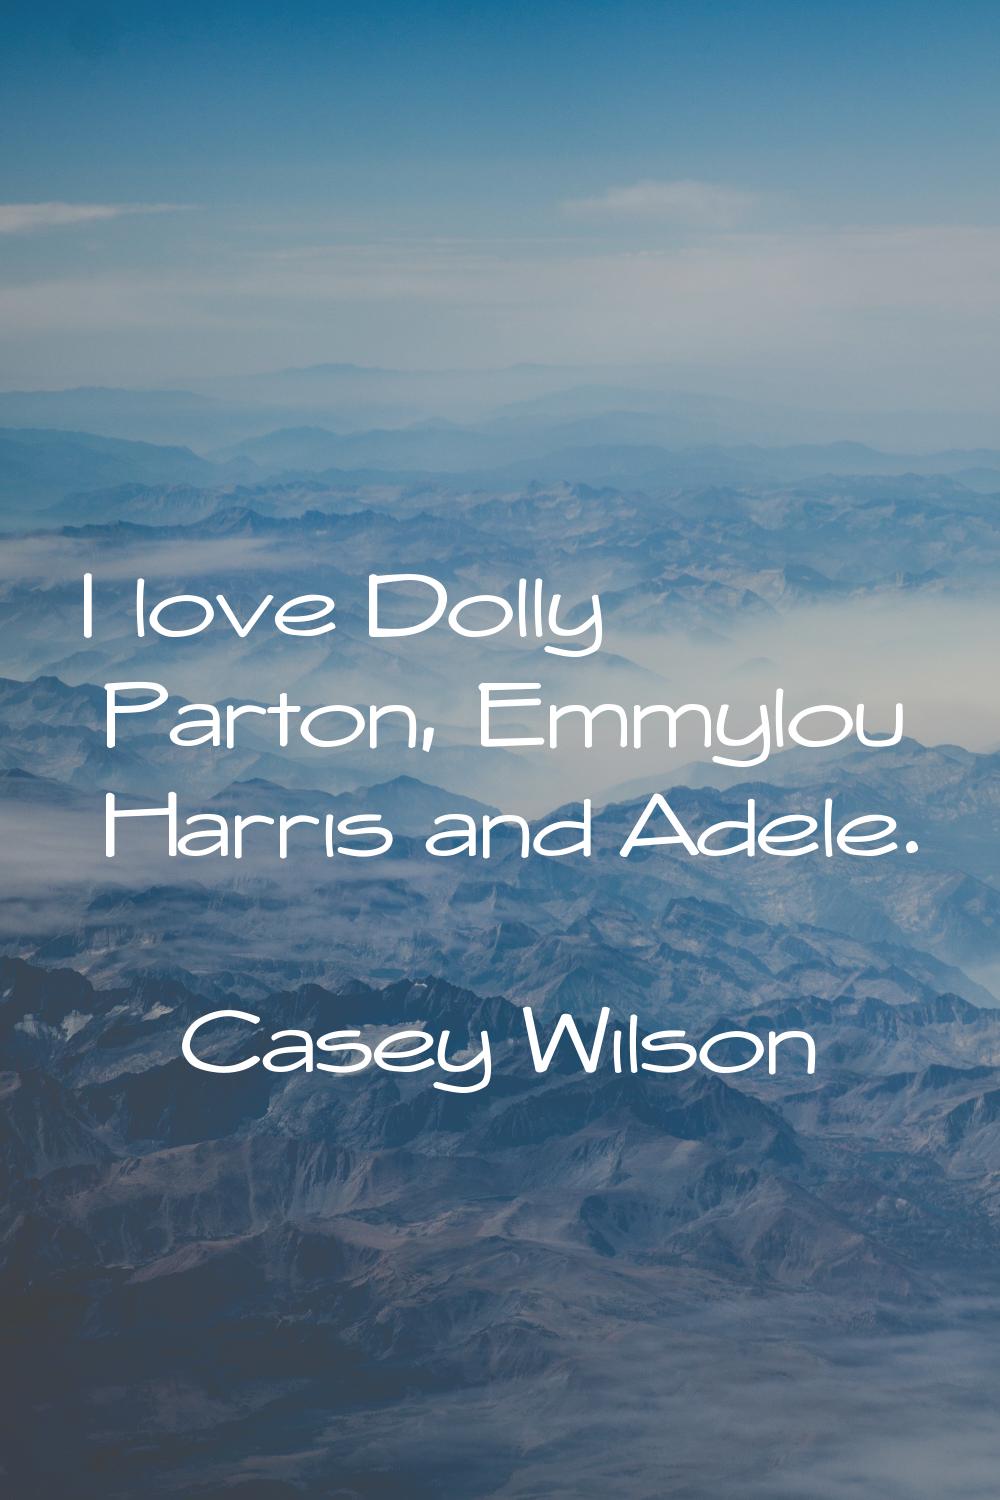 I love Dolly Parton, Emmylou Harris and Adele.